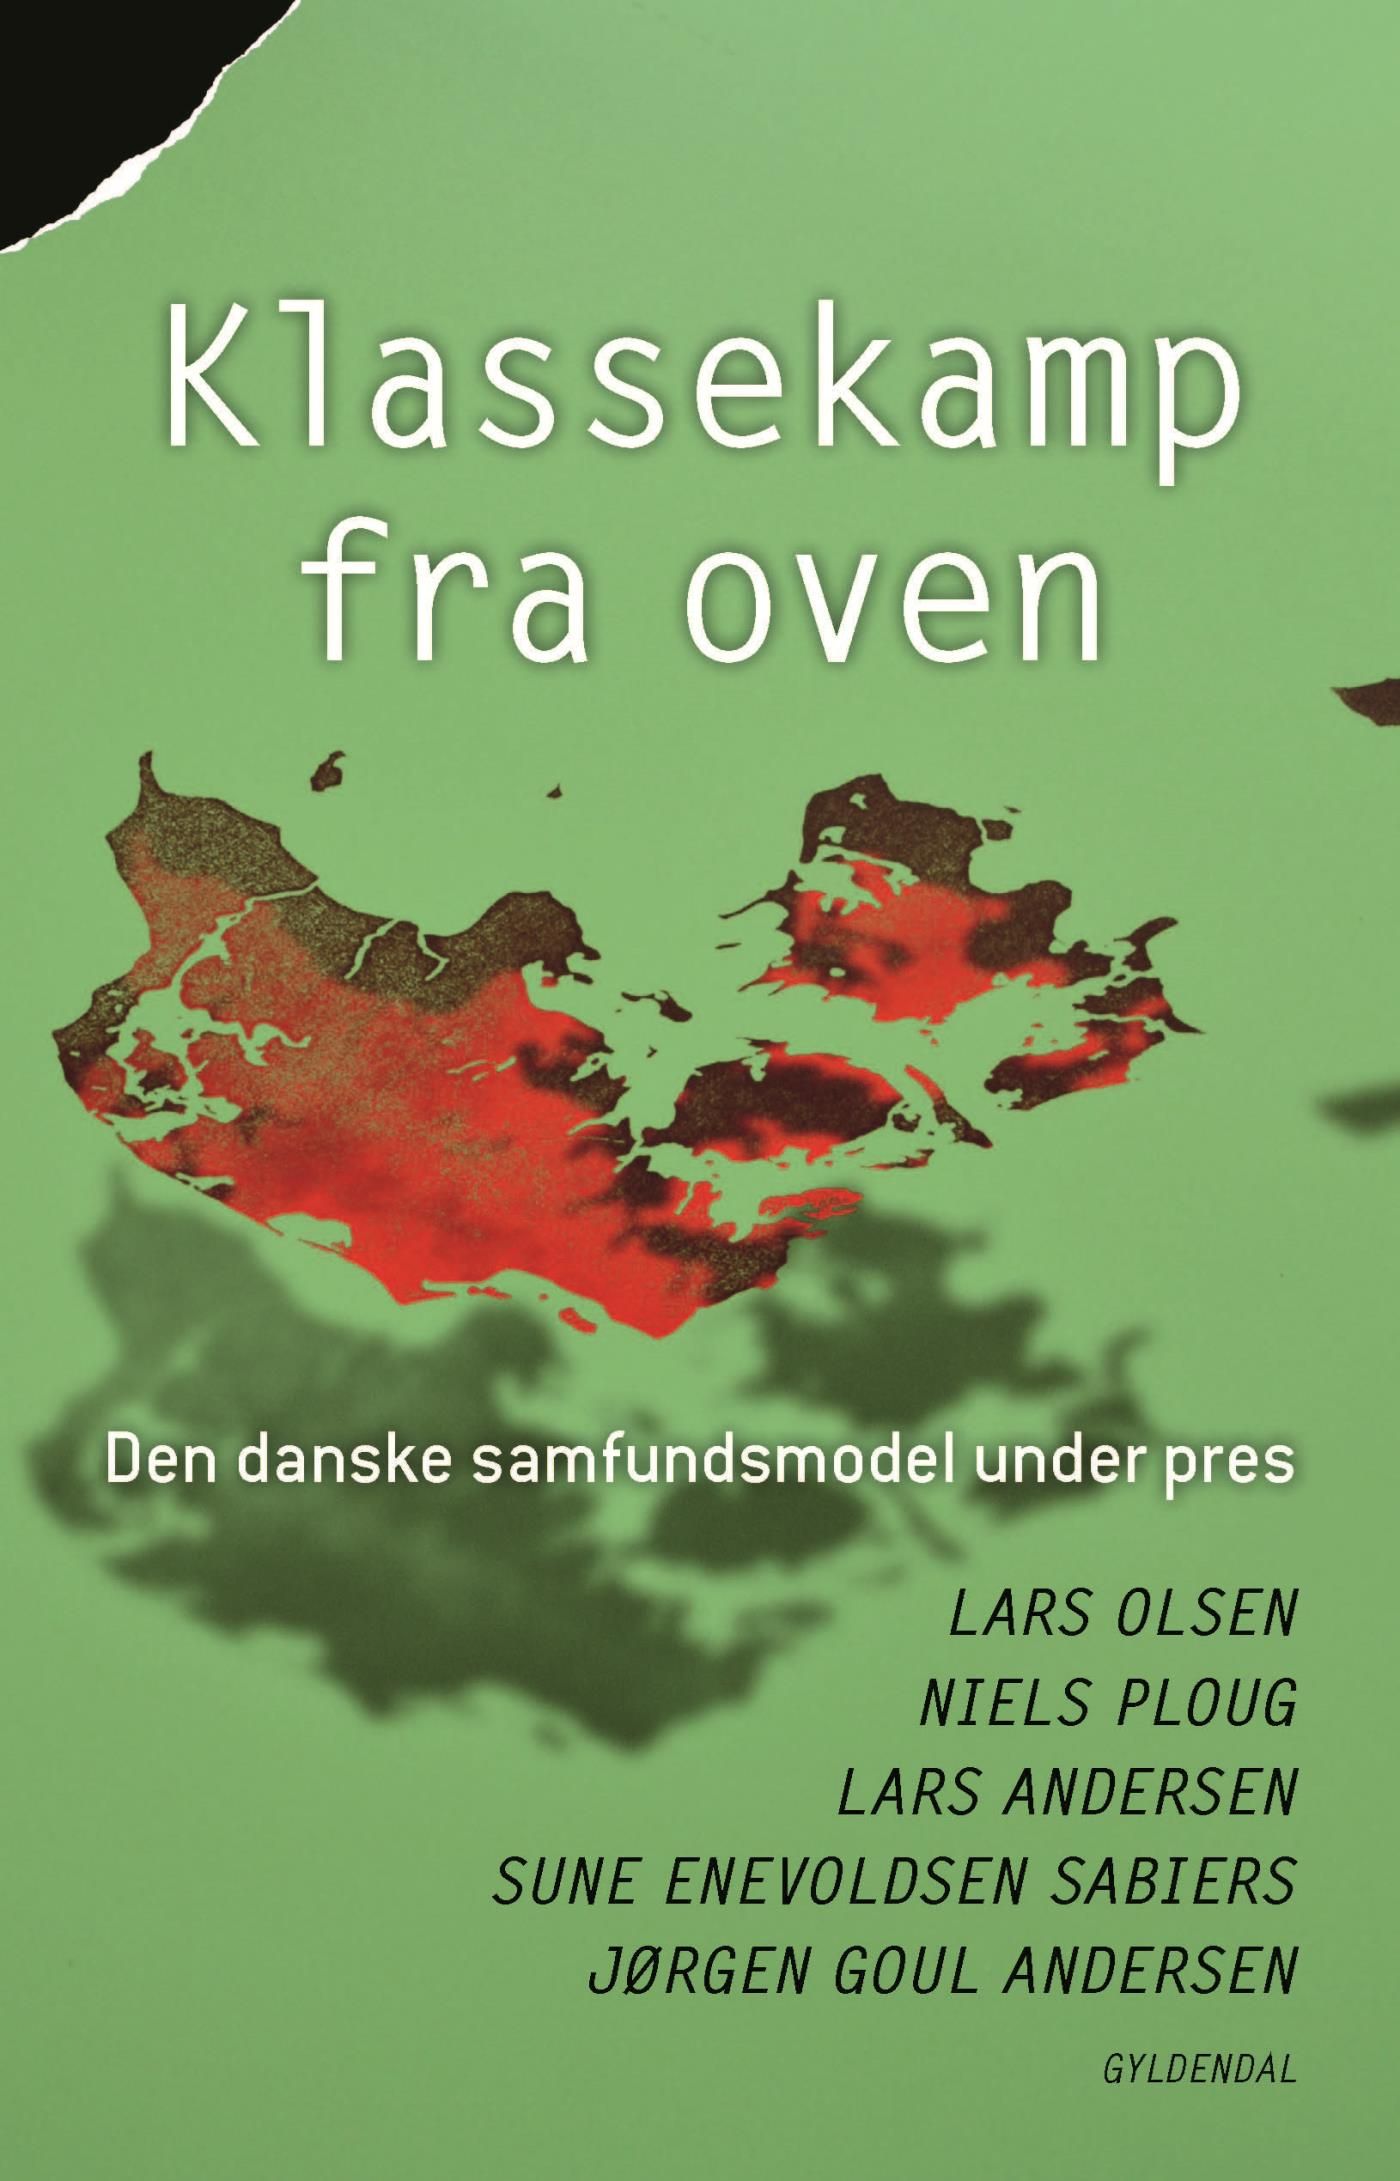 Klassekamp fra oven, e-bog af Jørgen Goul Andersen, Lars Andersen, Sune Enevoldsen Sabiers, Lars Olsen, Niels Ploug